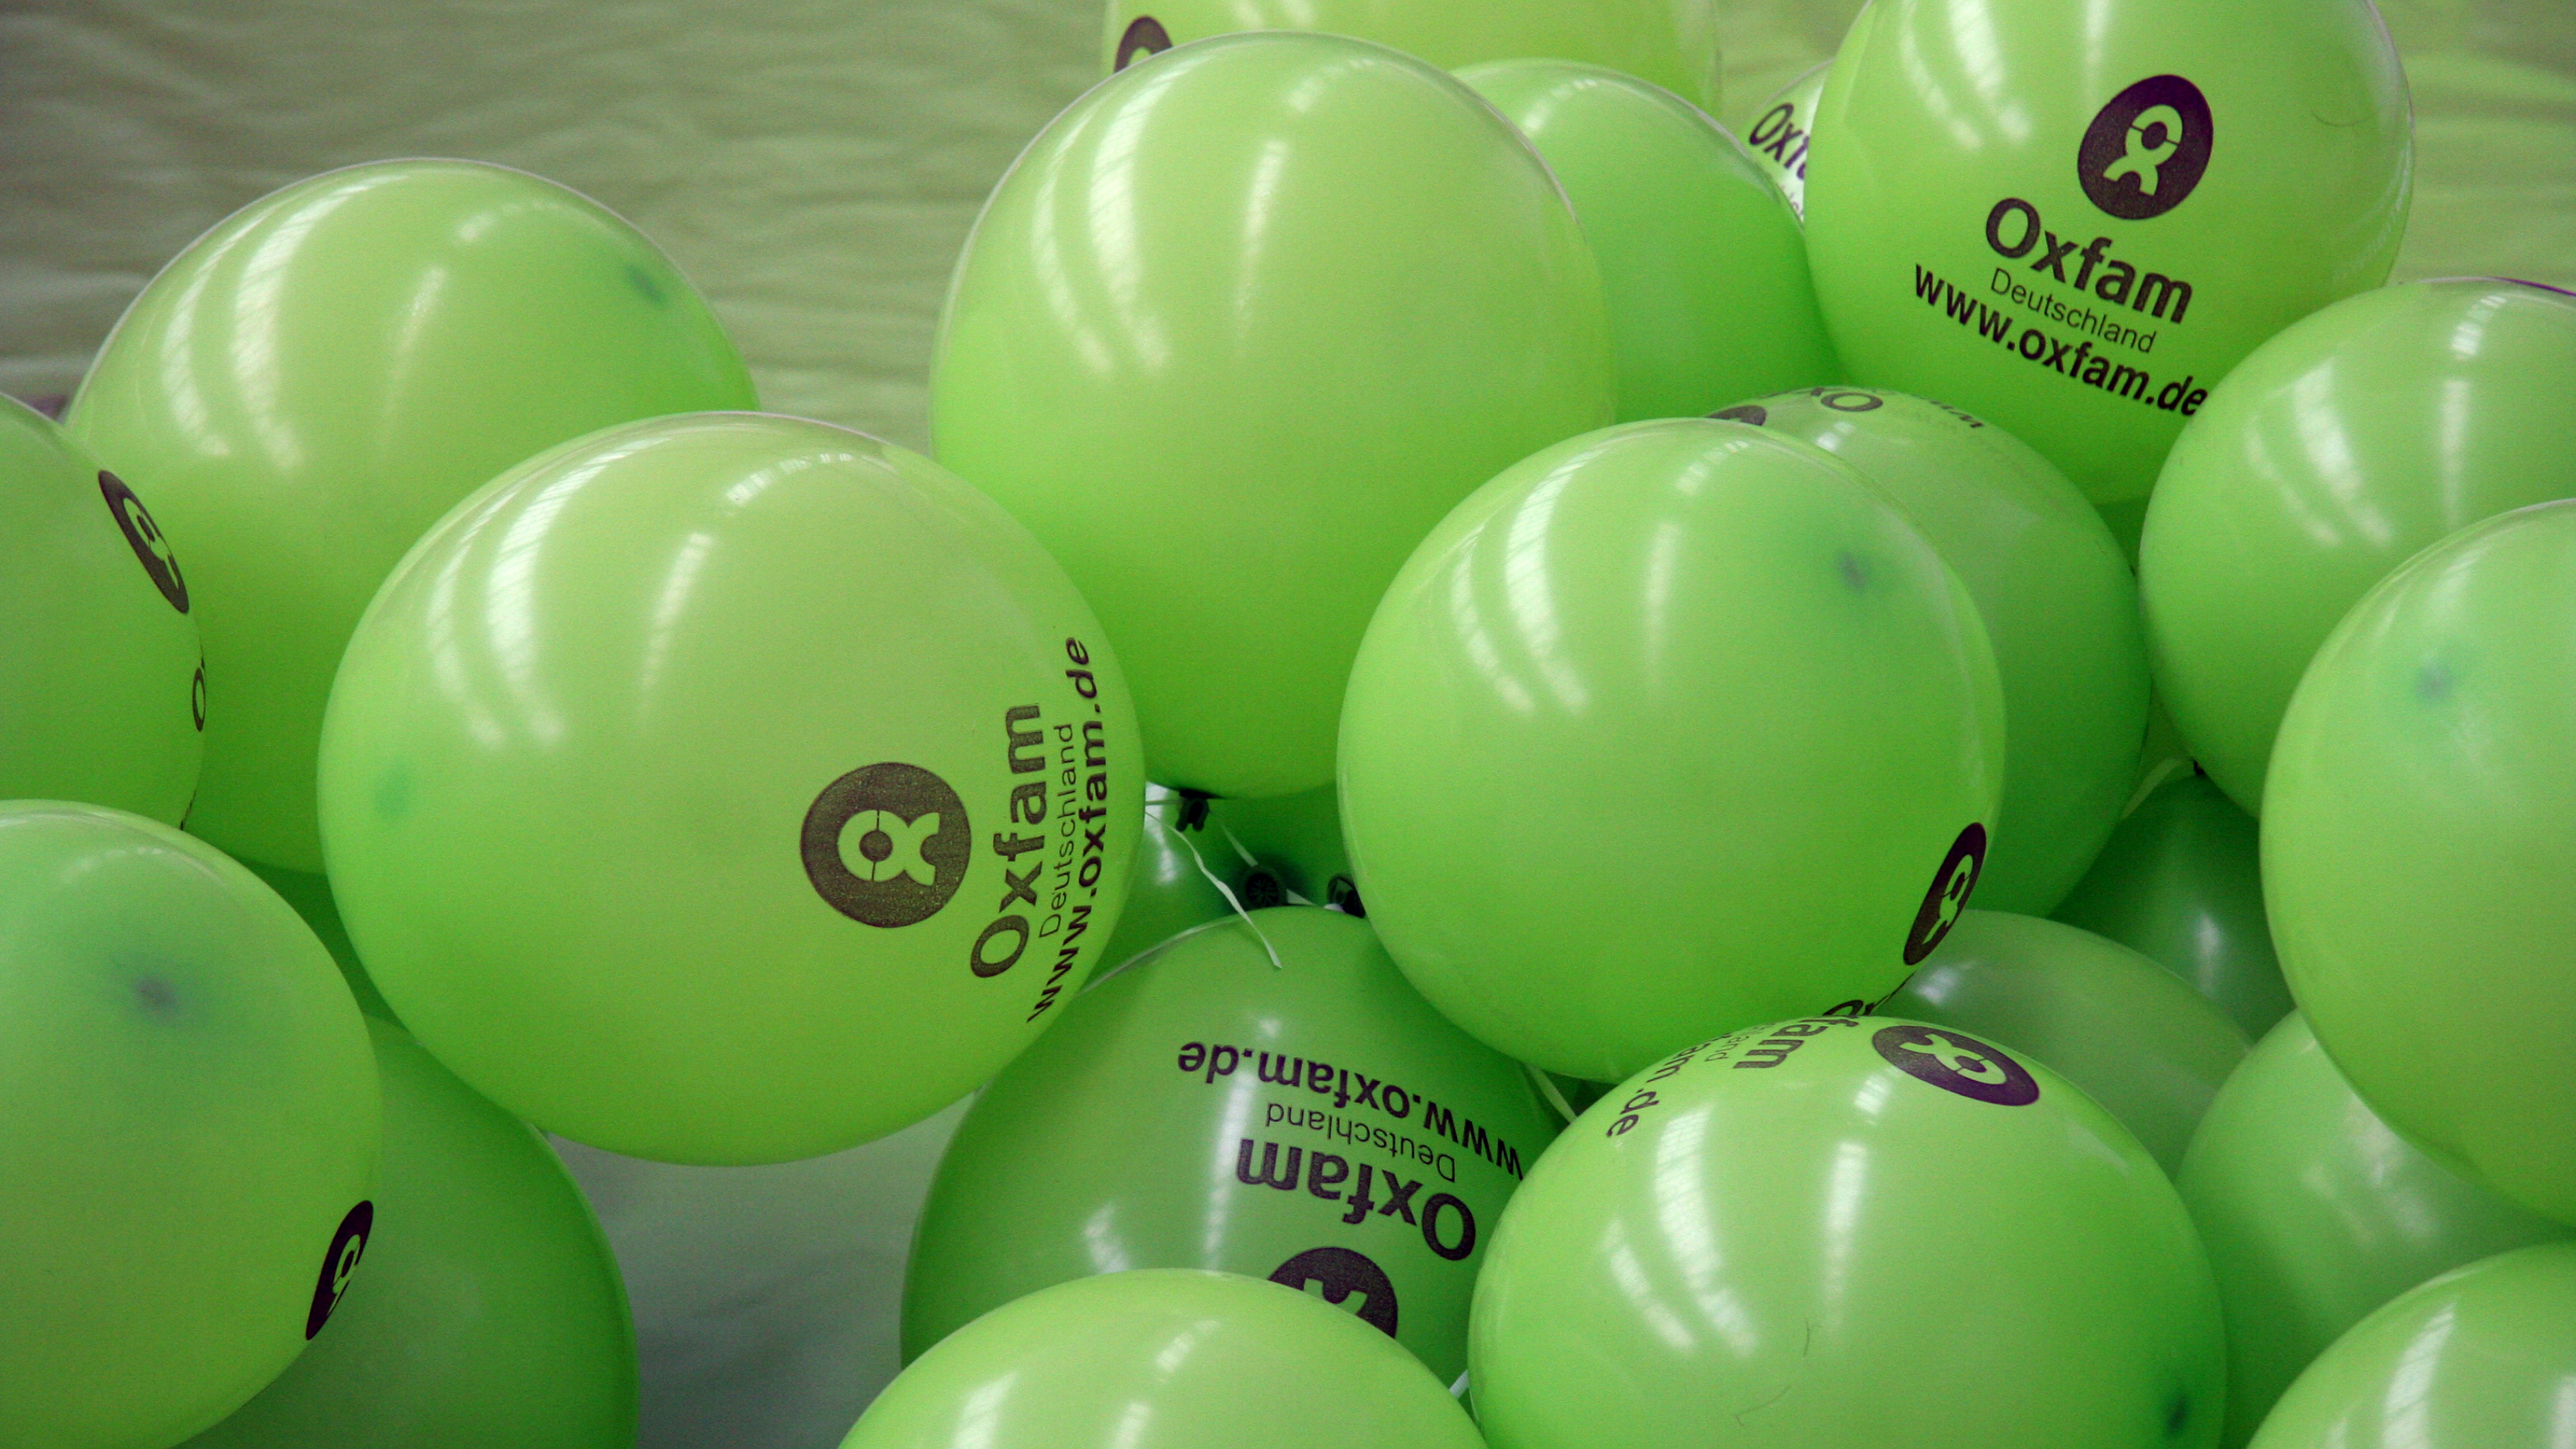 Ballons mit Oxfam-Logo